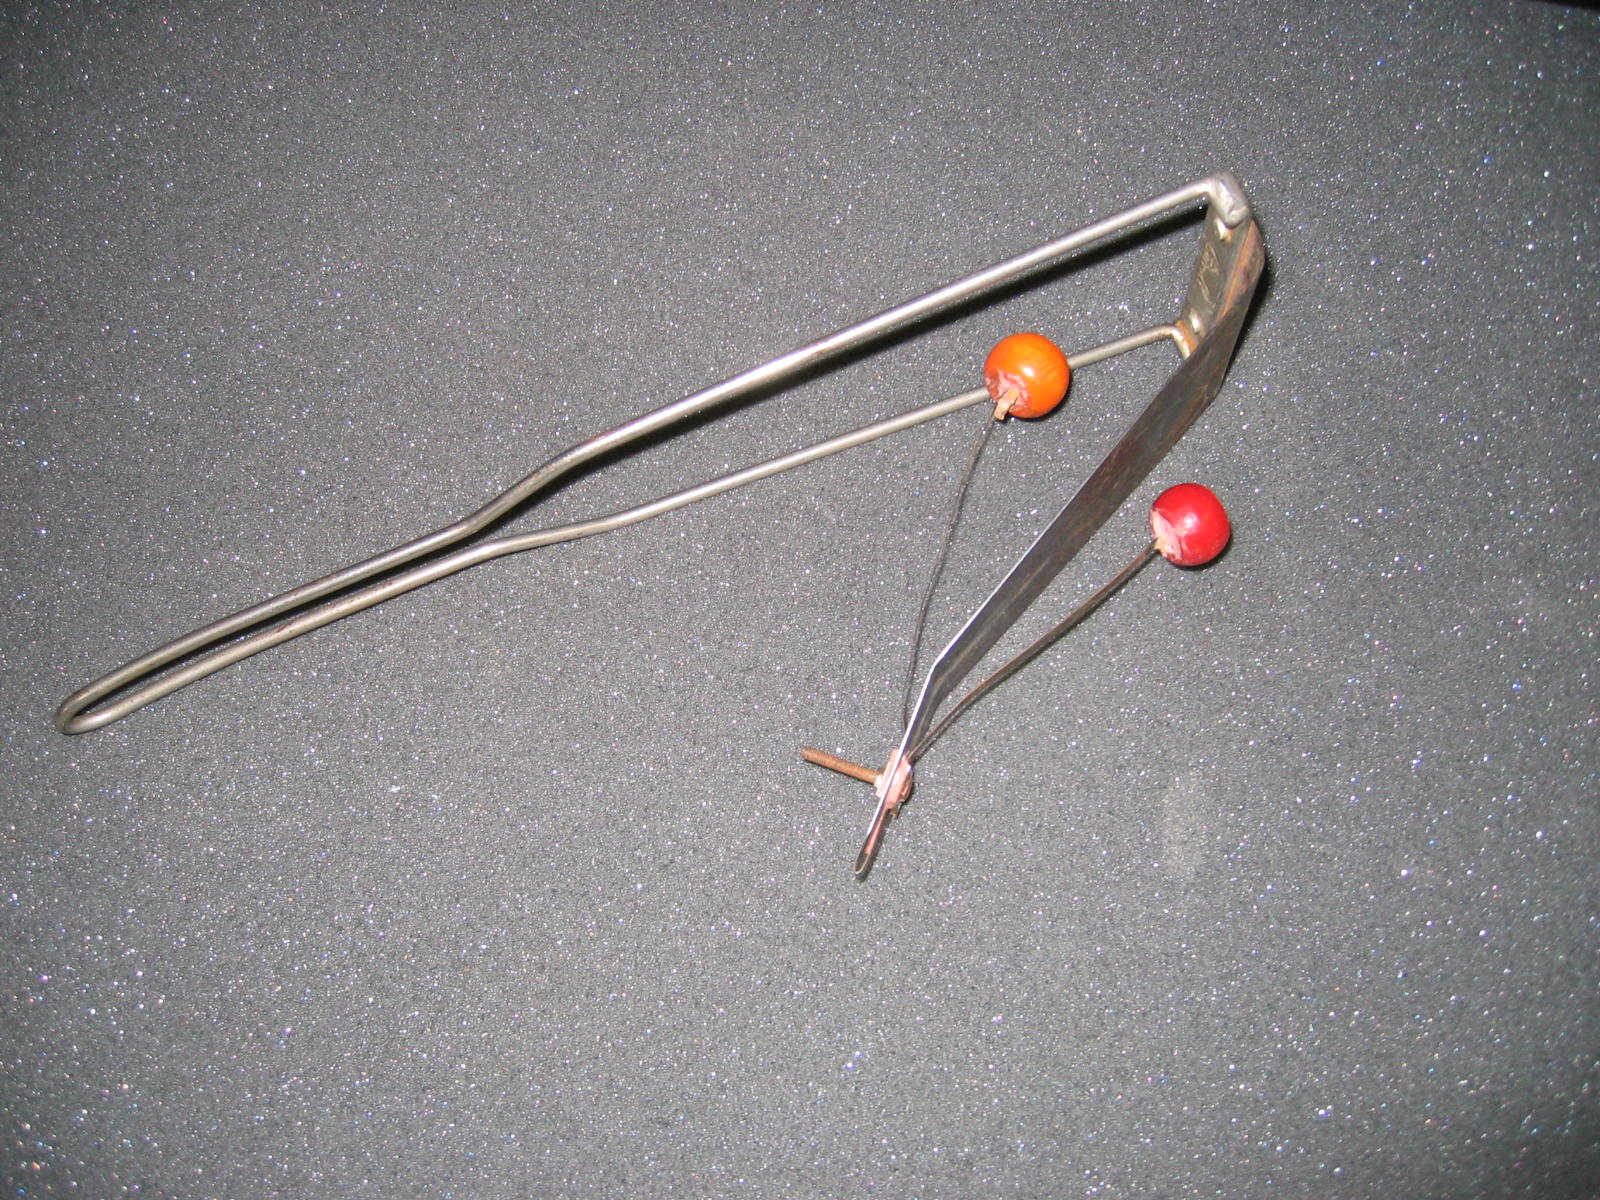 A photo of the instrument flexatone